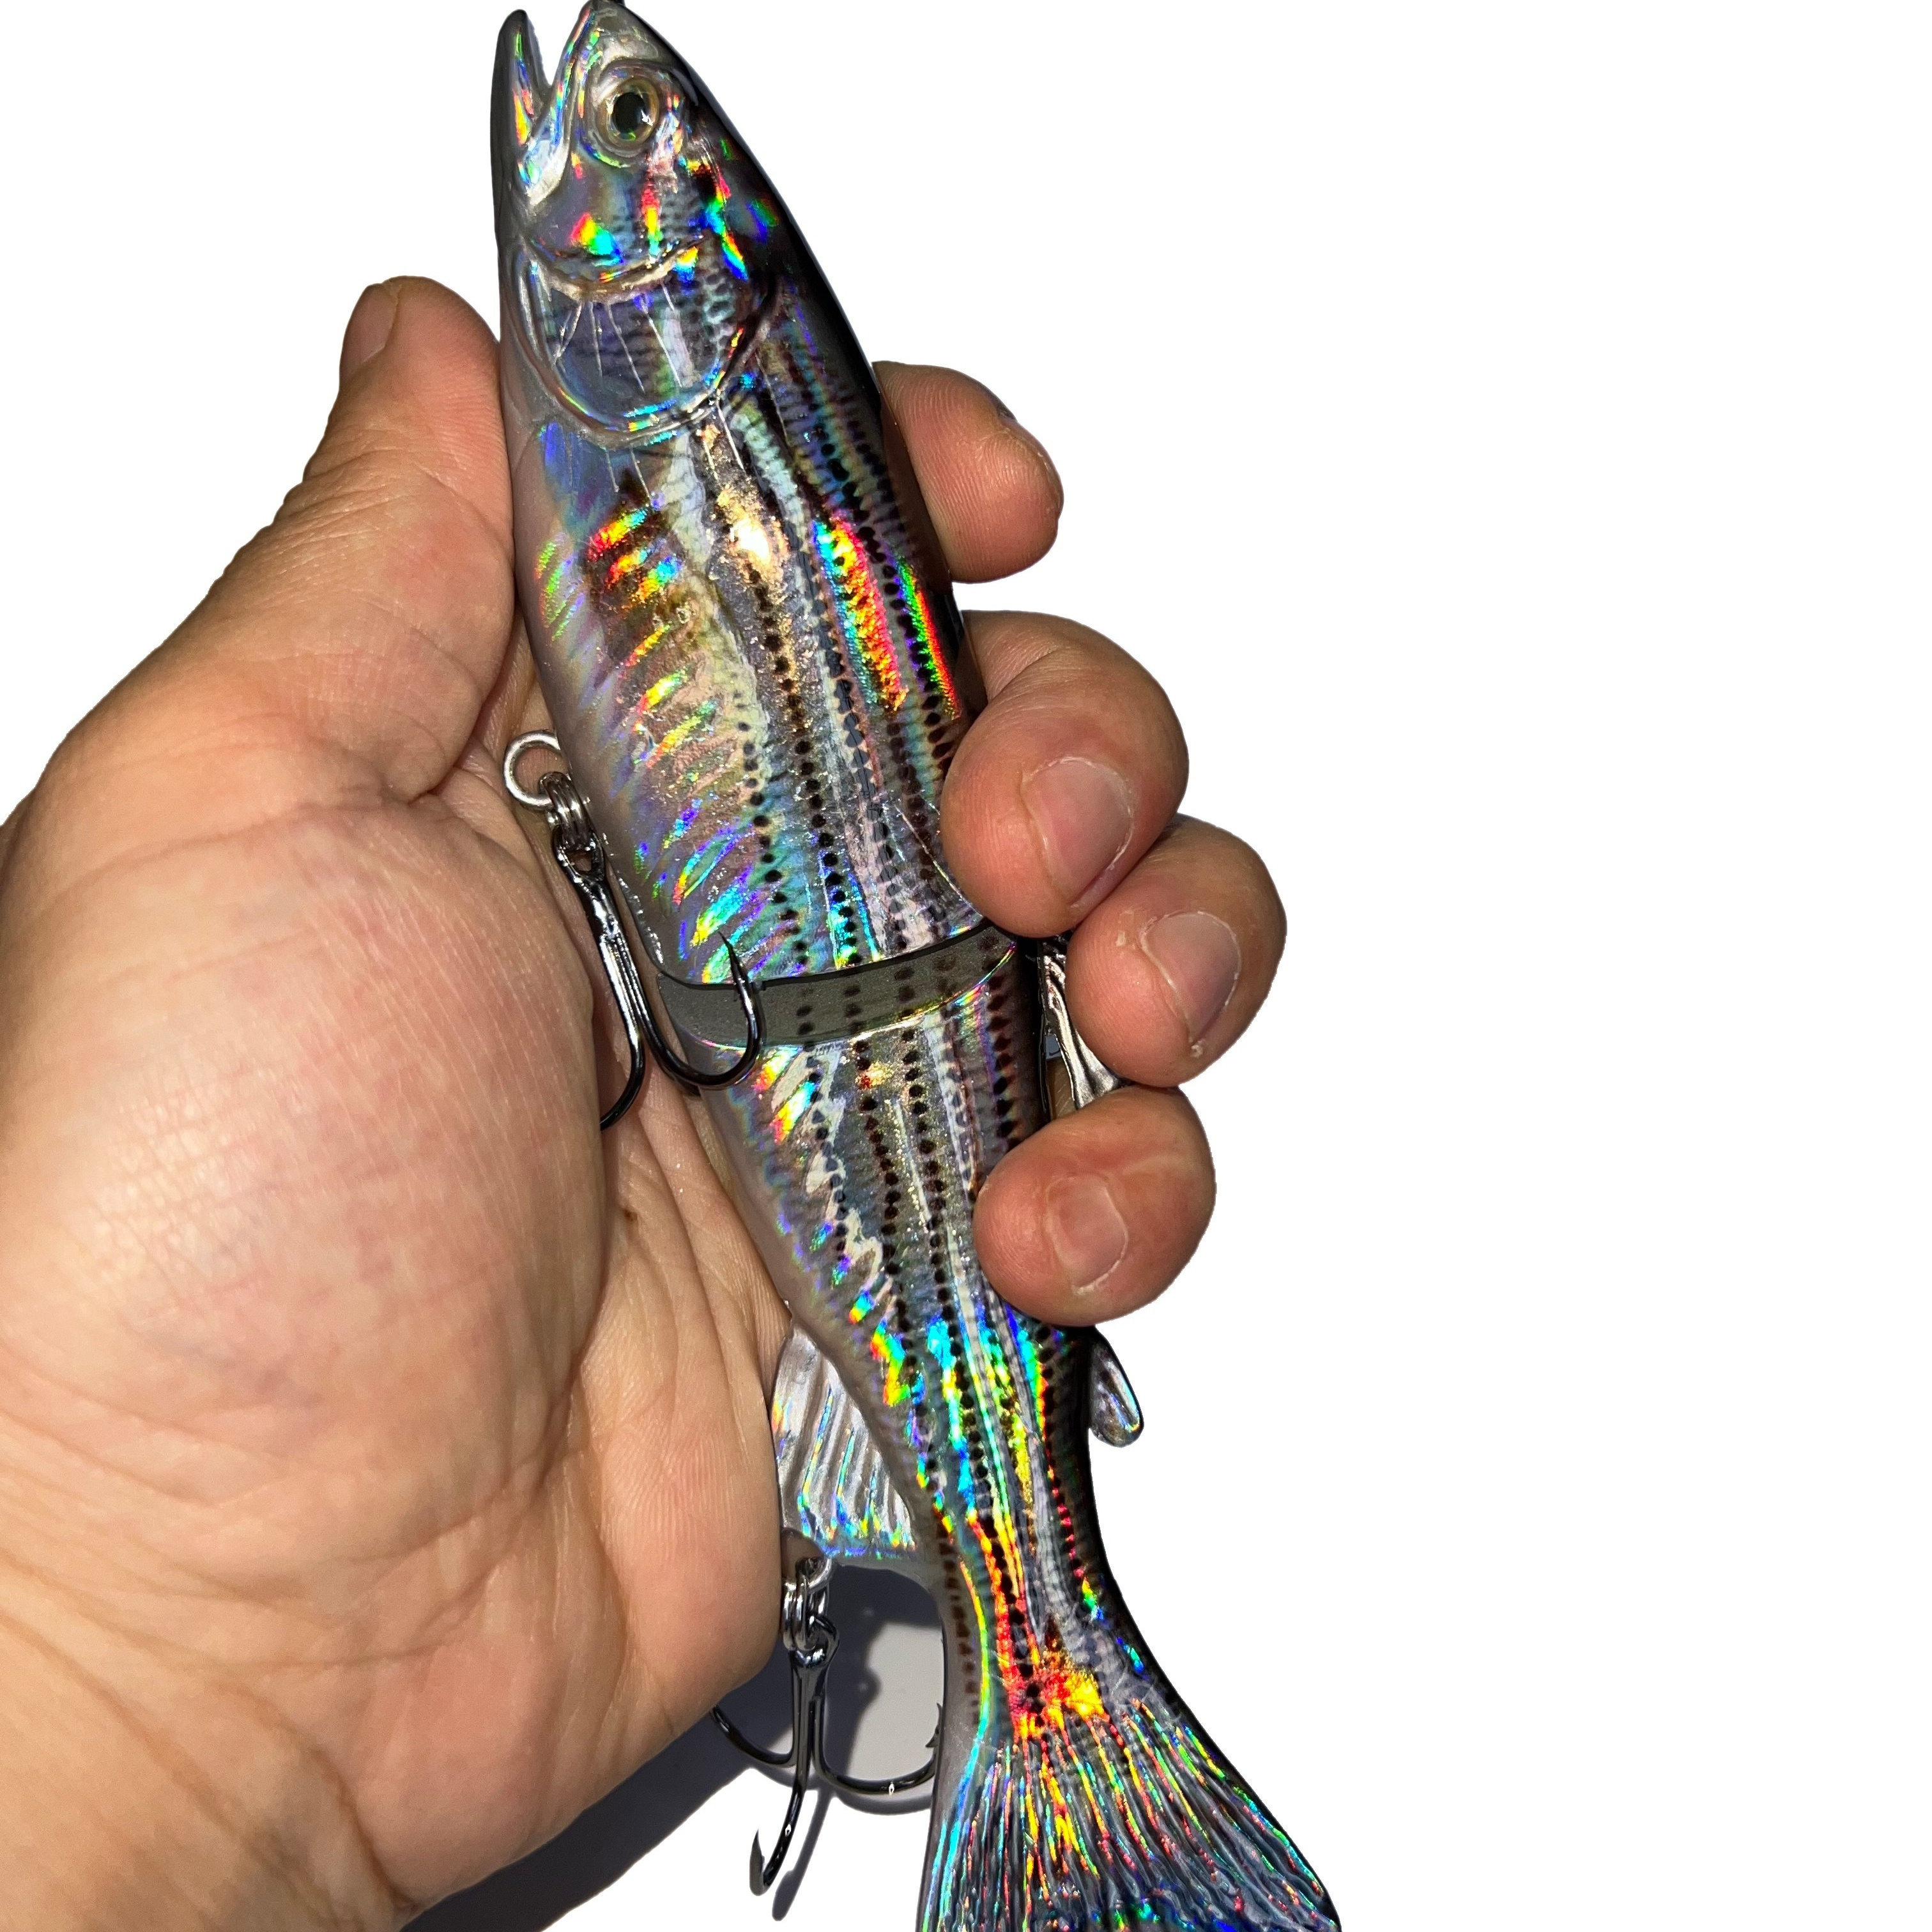 Wallago Attu Tail Swimbaits Soft Plastic Fishing Lures Bass - Temu